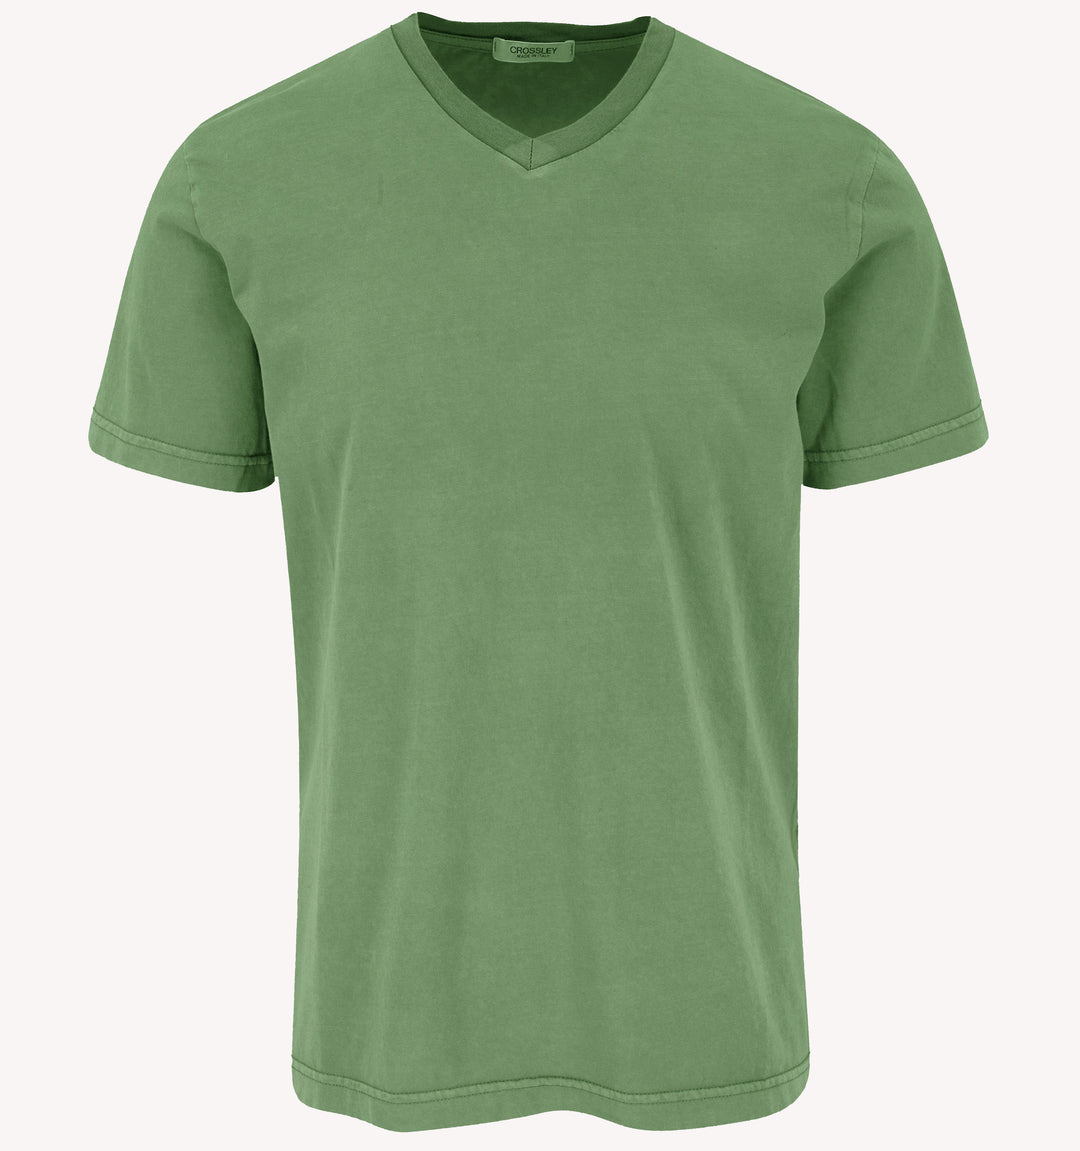 Crossley V-Neck T-Shirt in Light Green